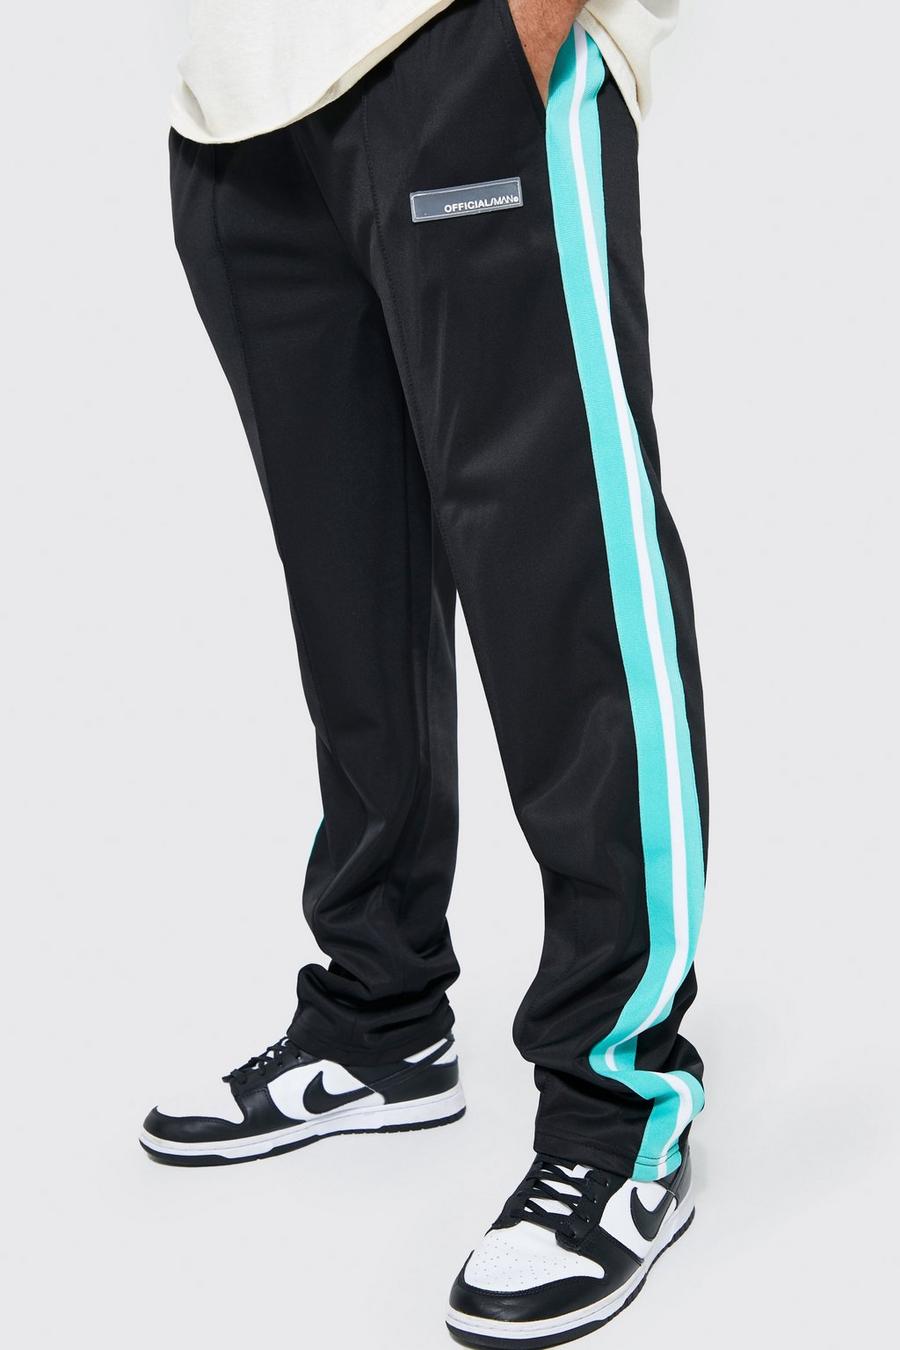 Official Man Jogginghose mit Trikot-Streifen, Black schwarz